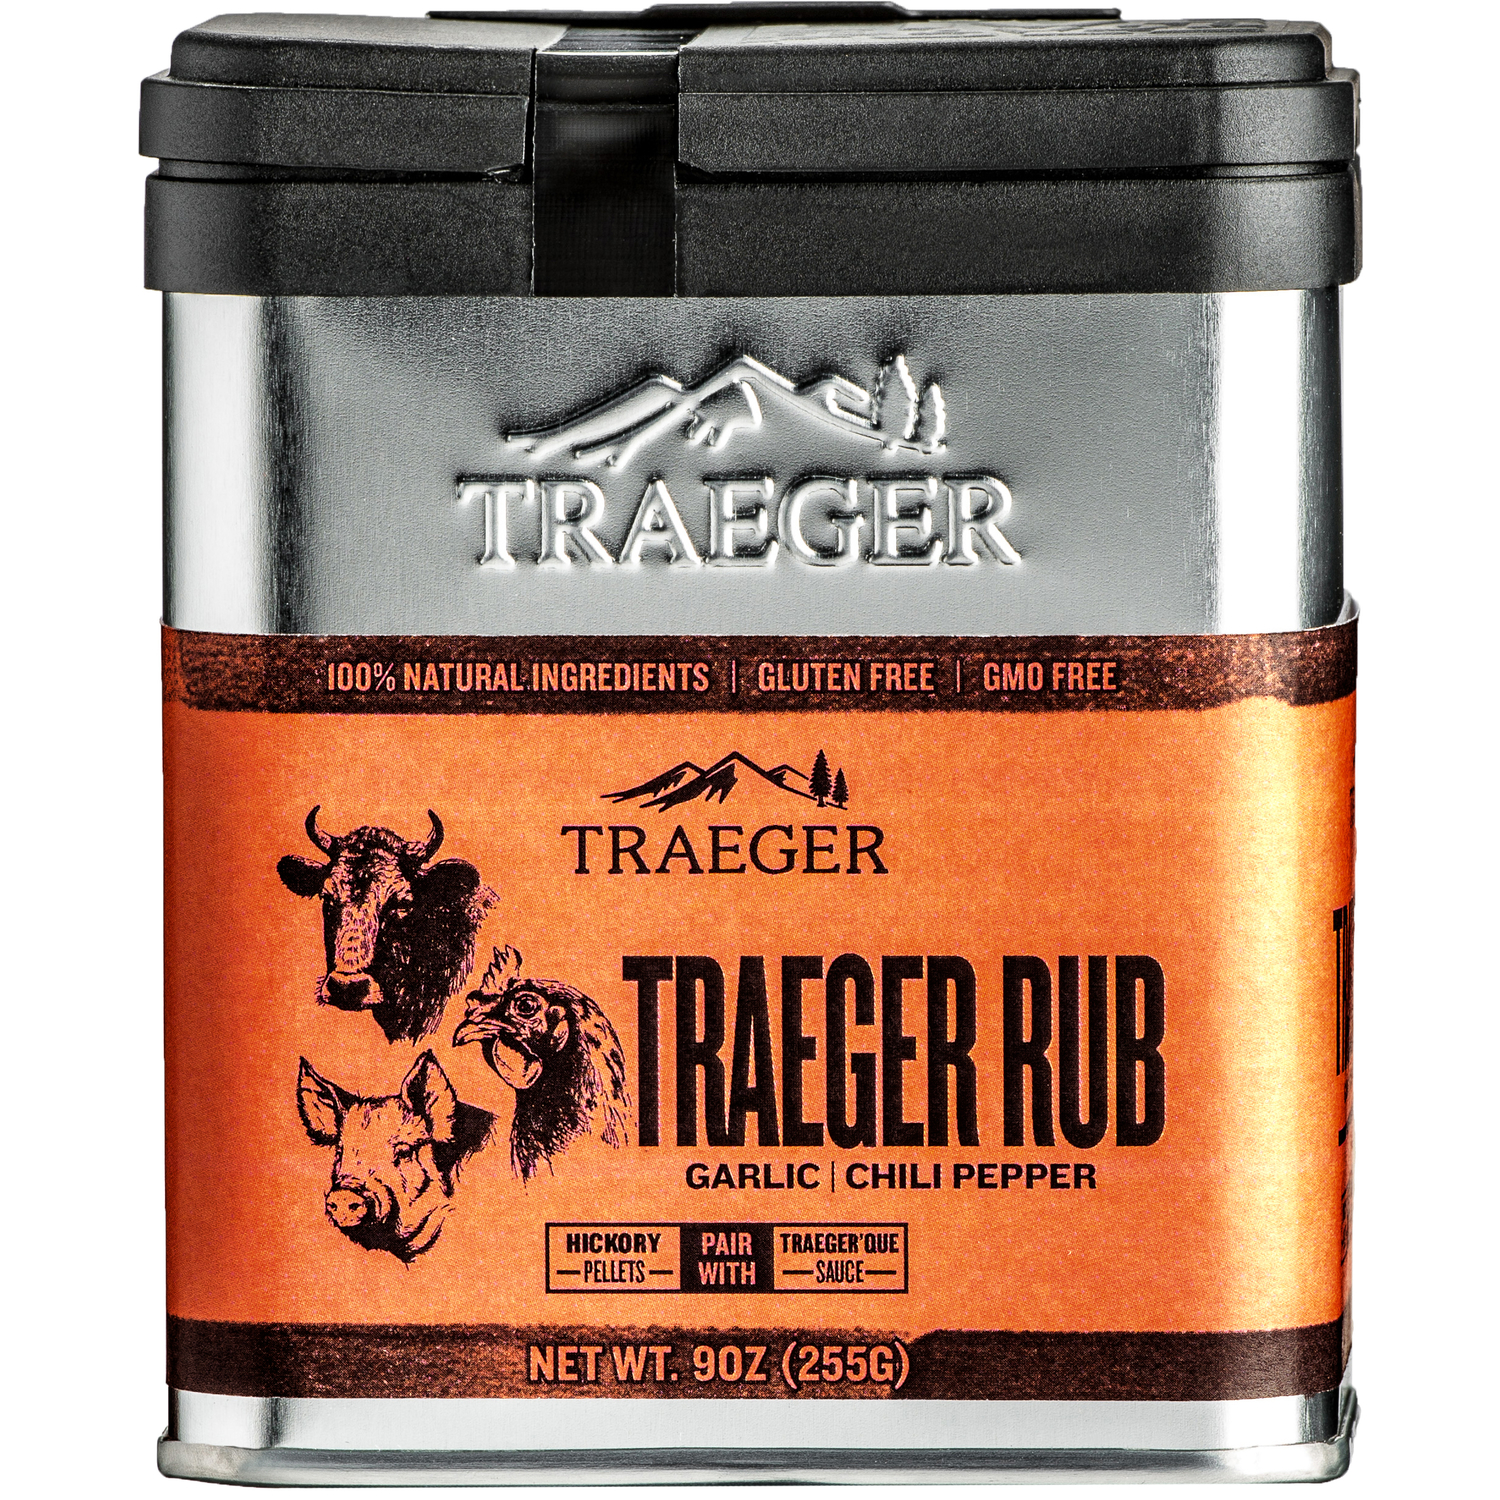 Top 5 price comparison Traeger Grills Traeger Rub with Garlic and Chili Pepper